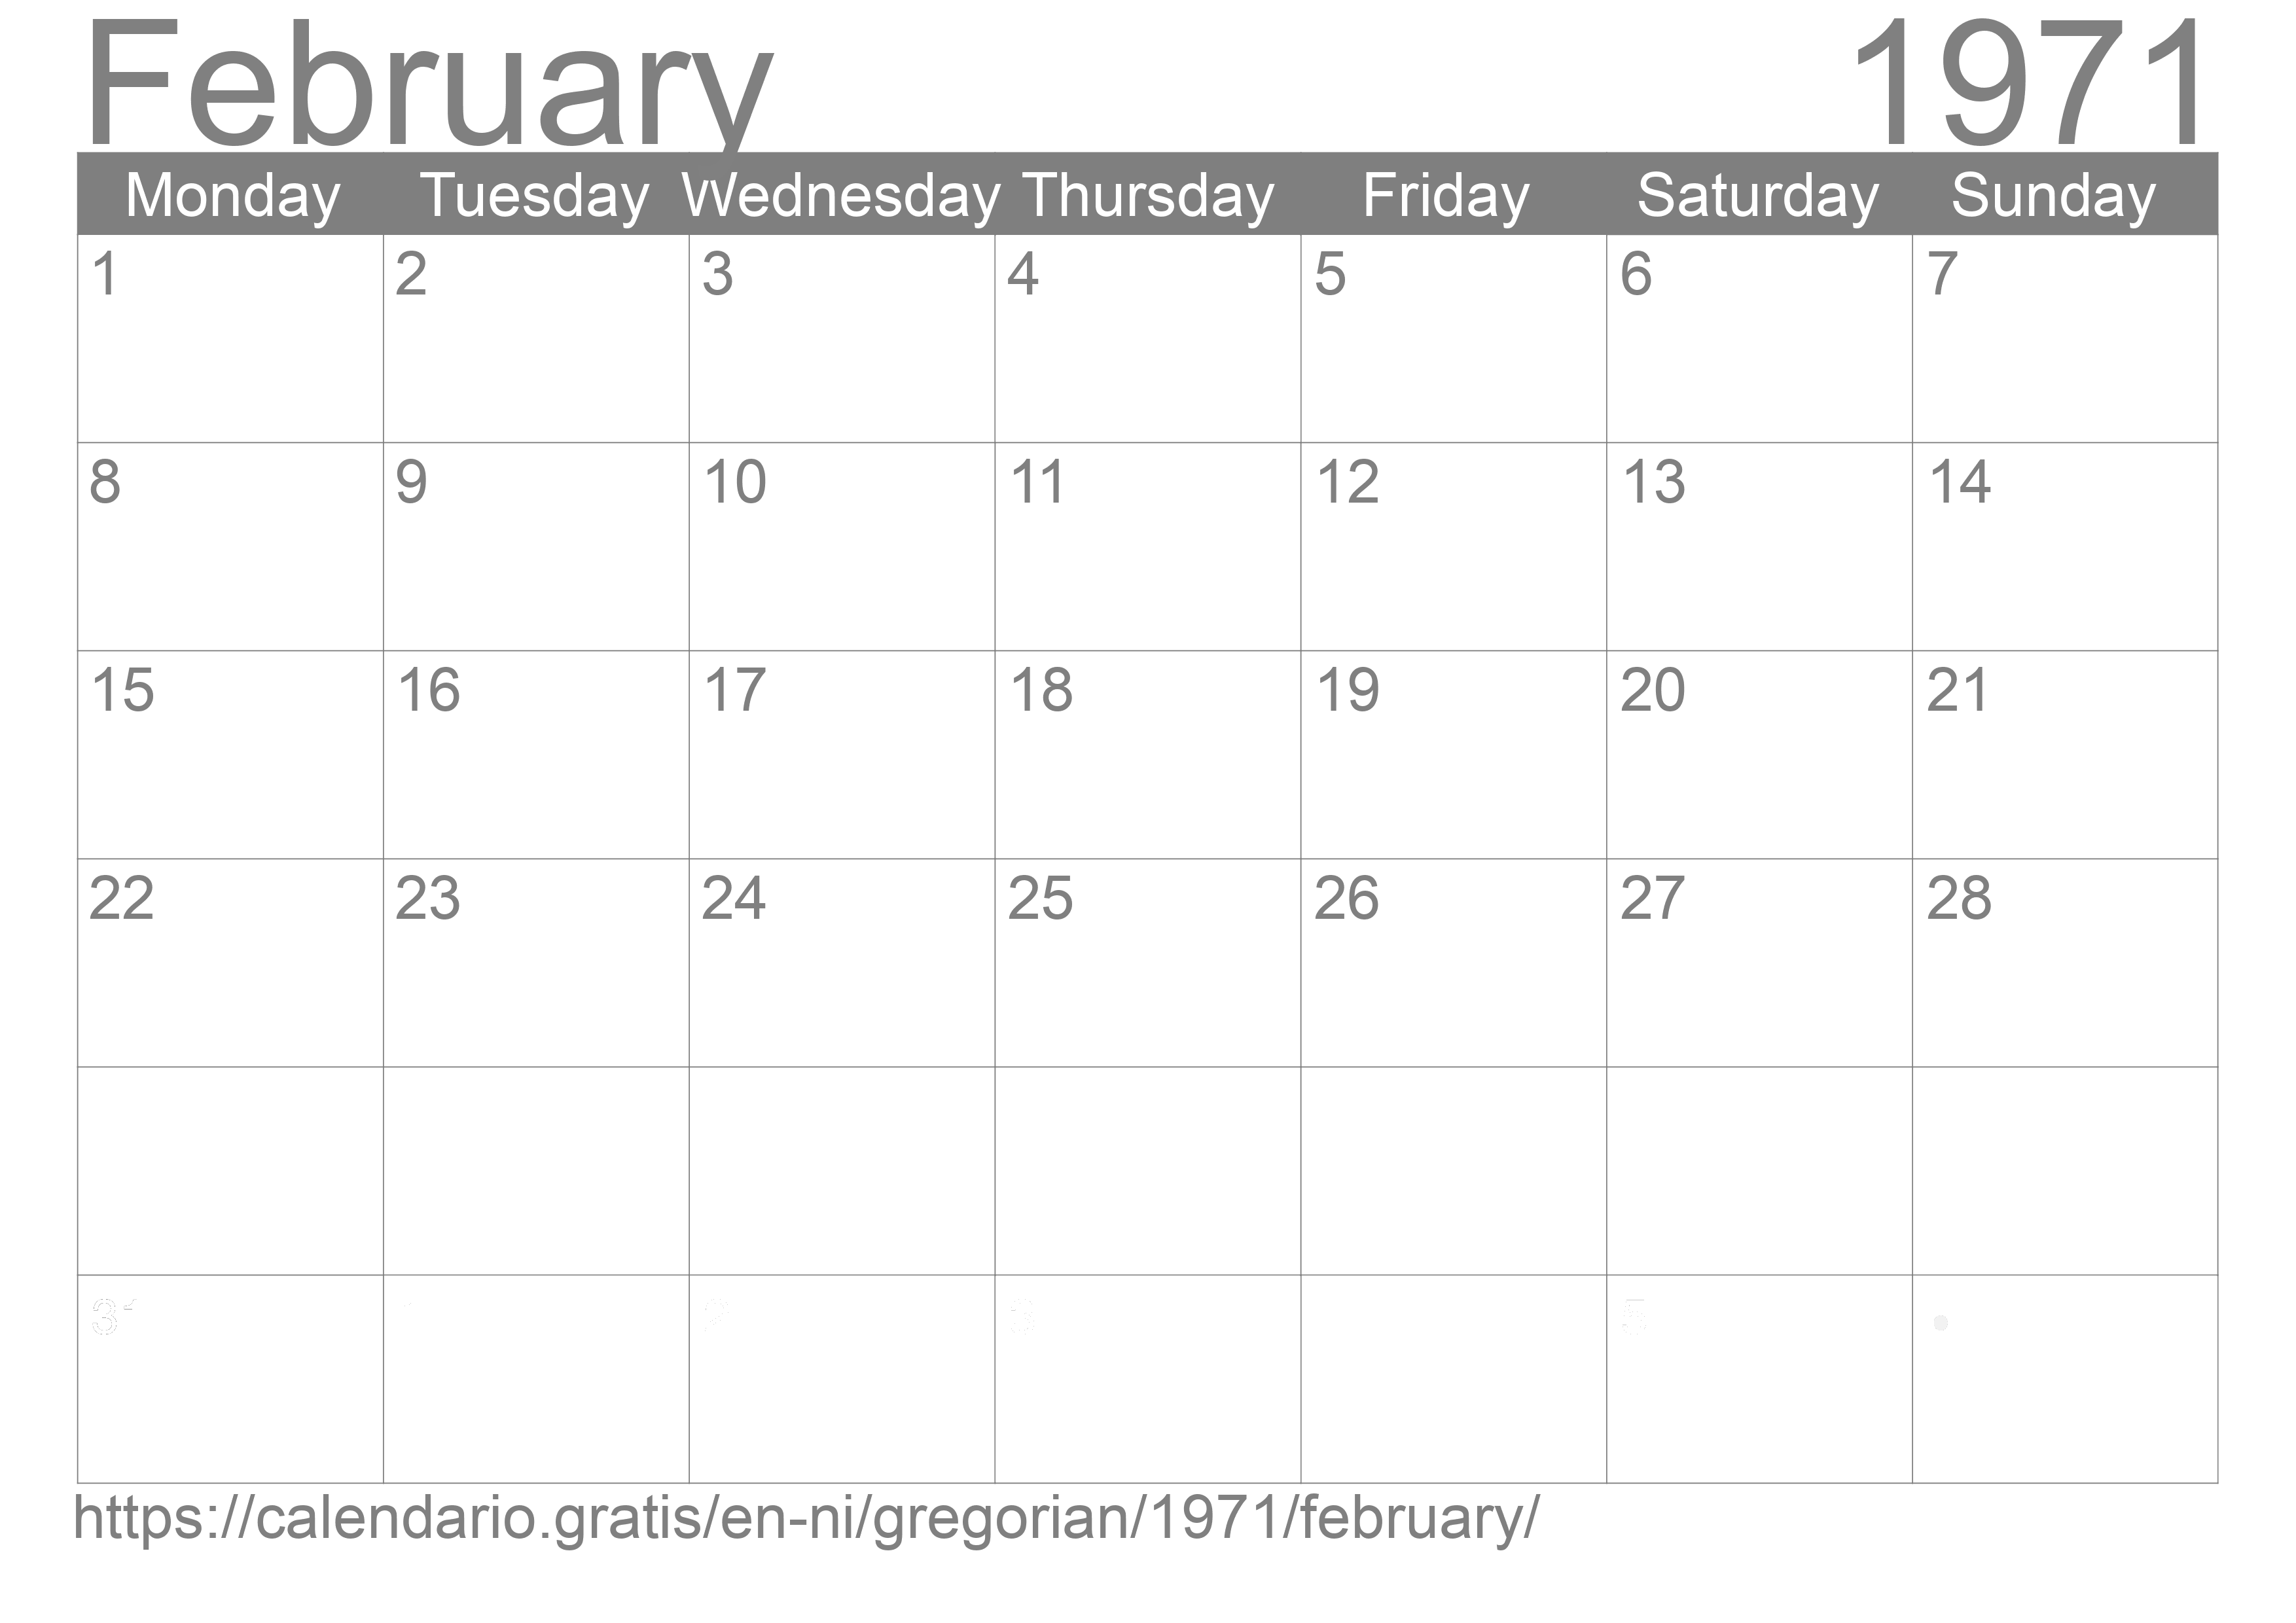 Calendar February 1971 to print